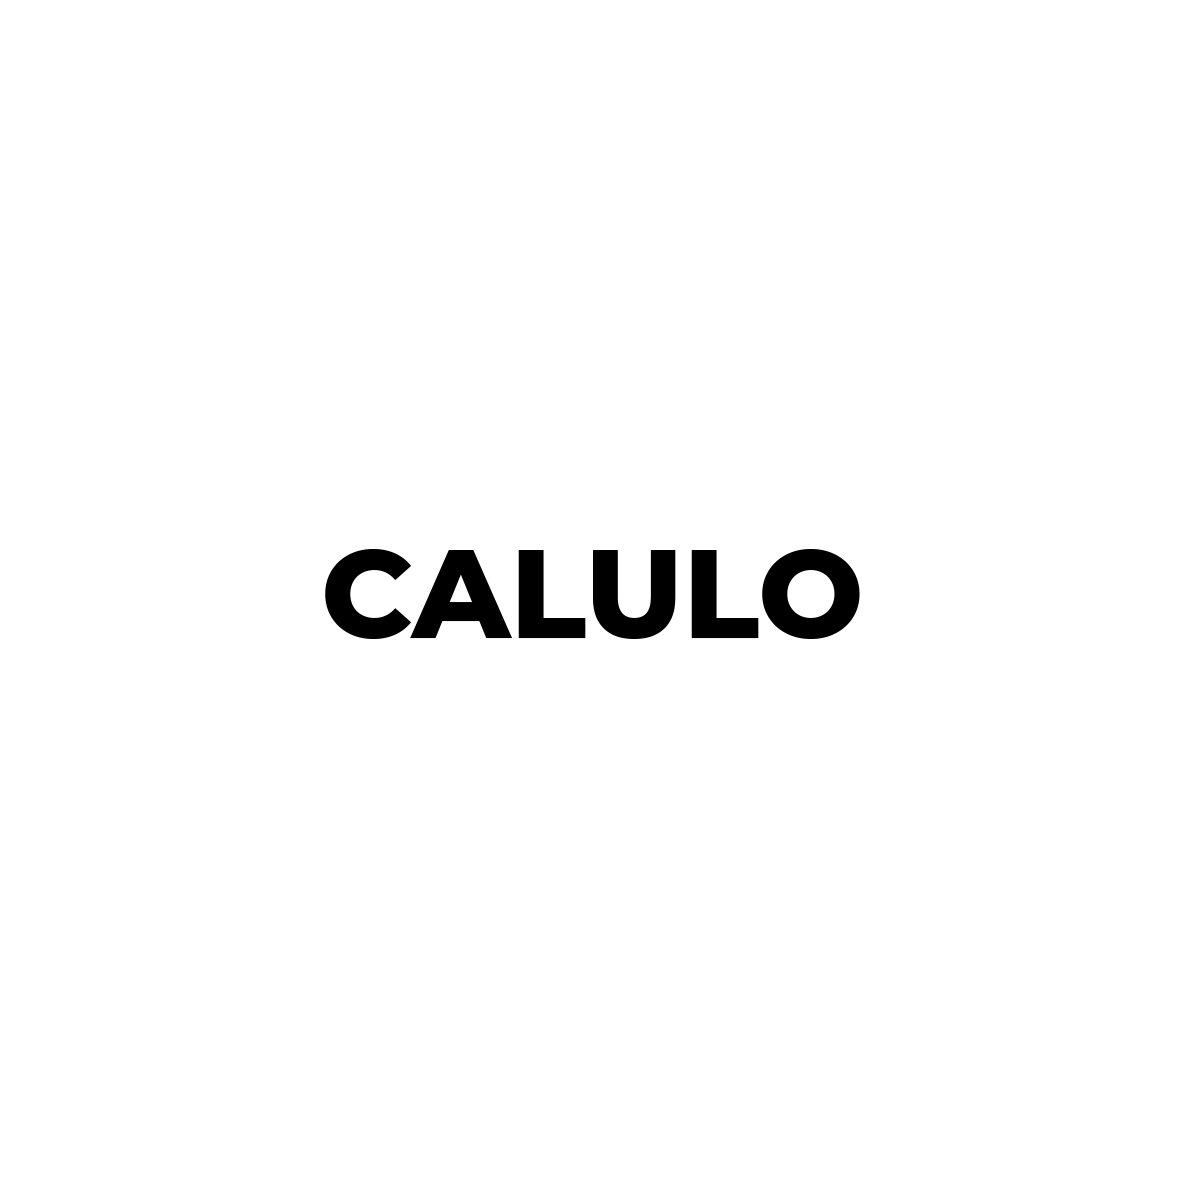 Calulo